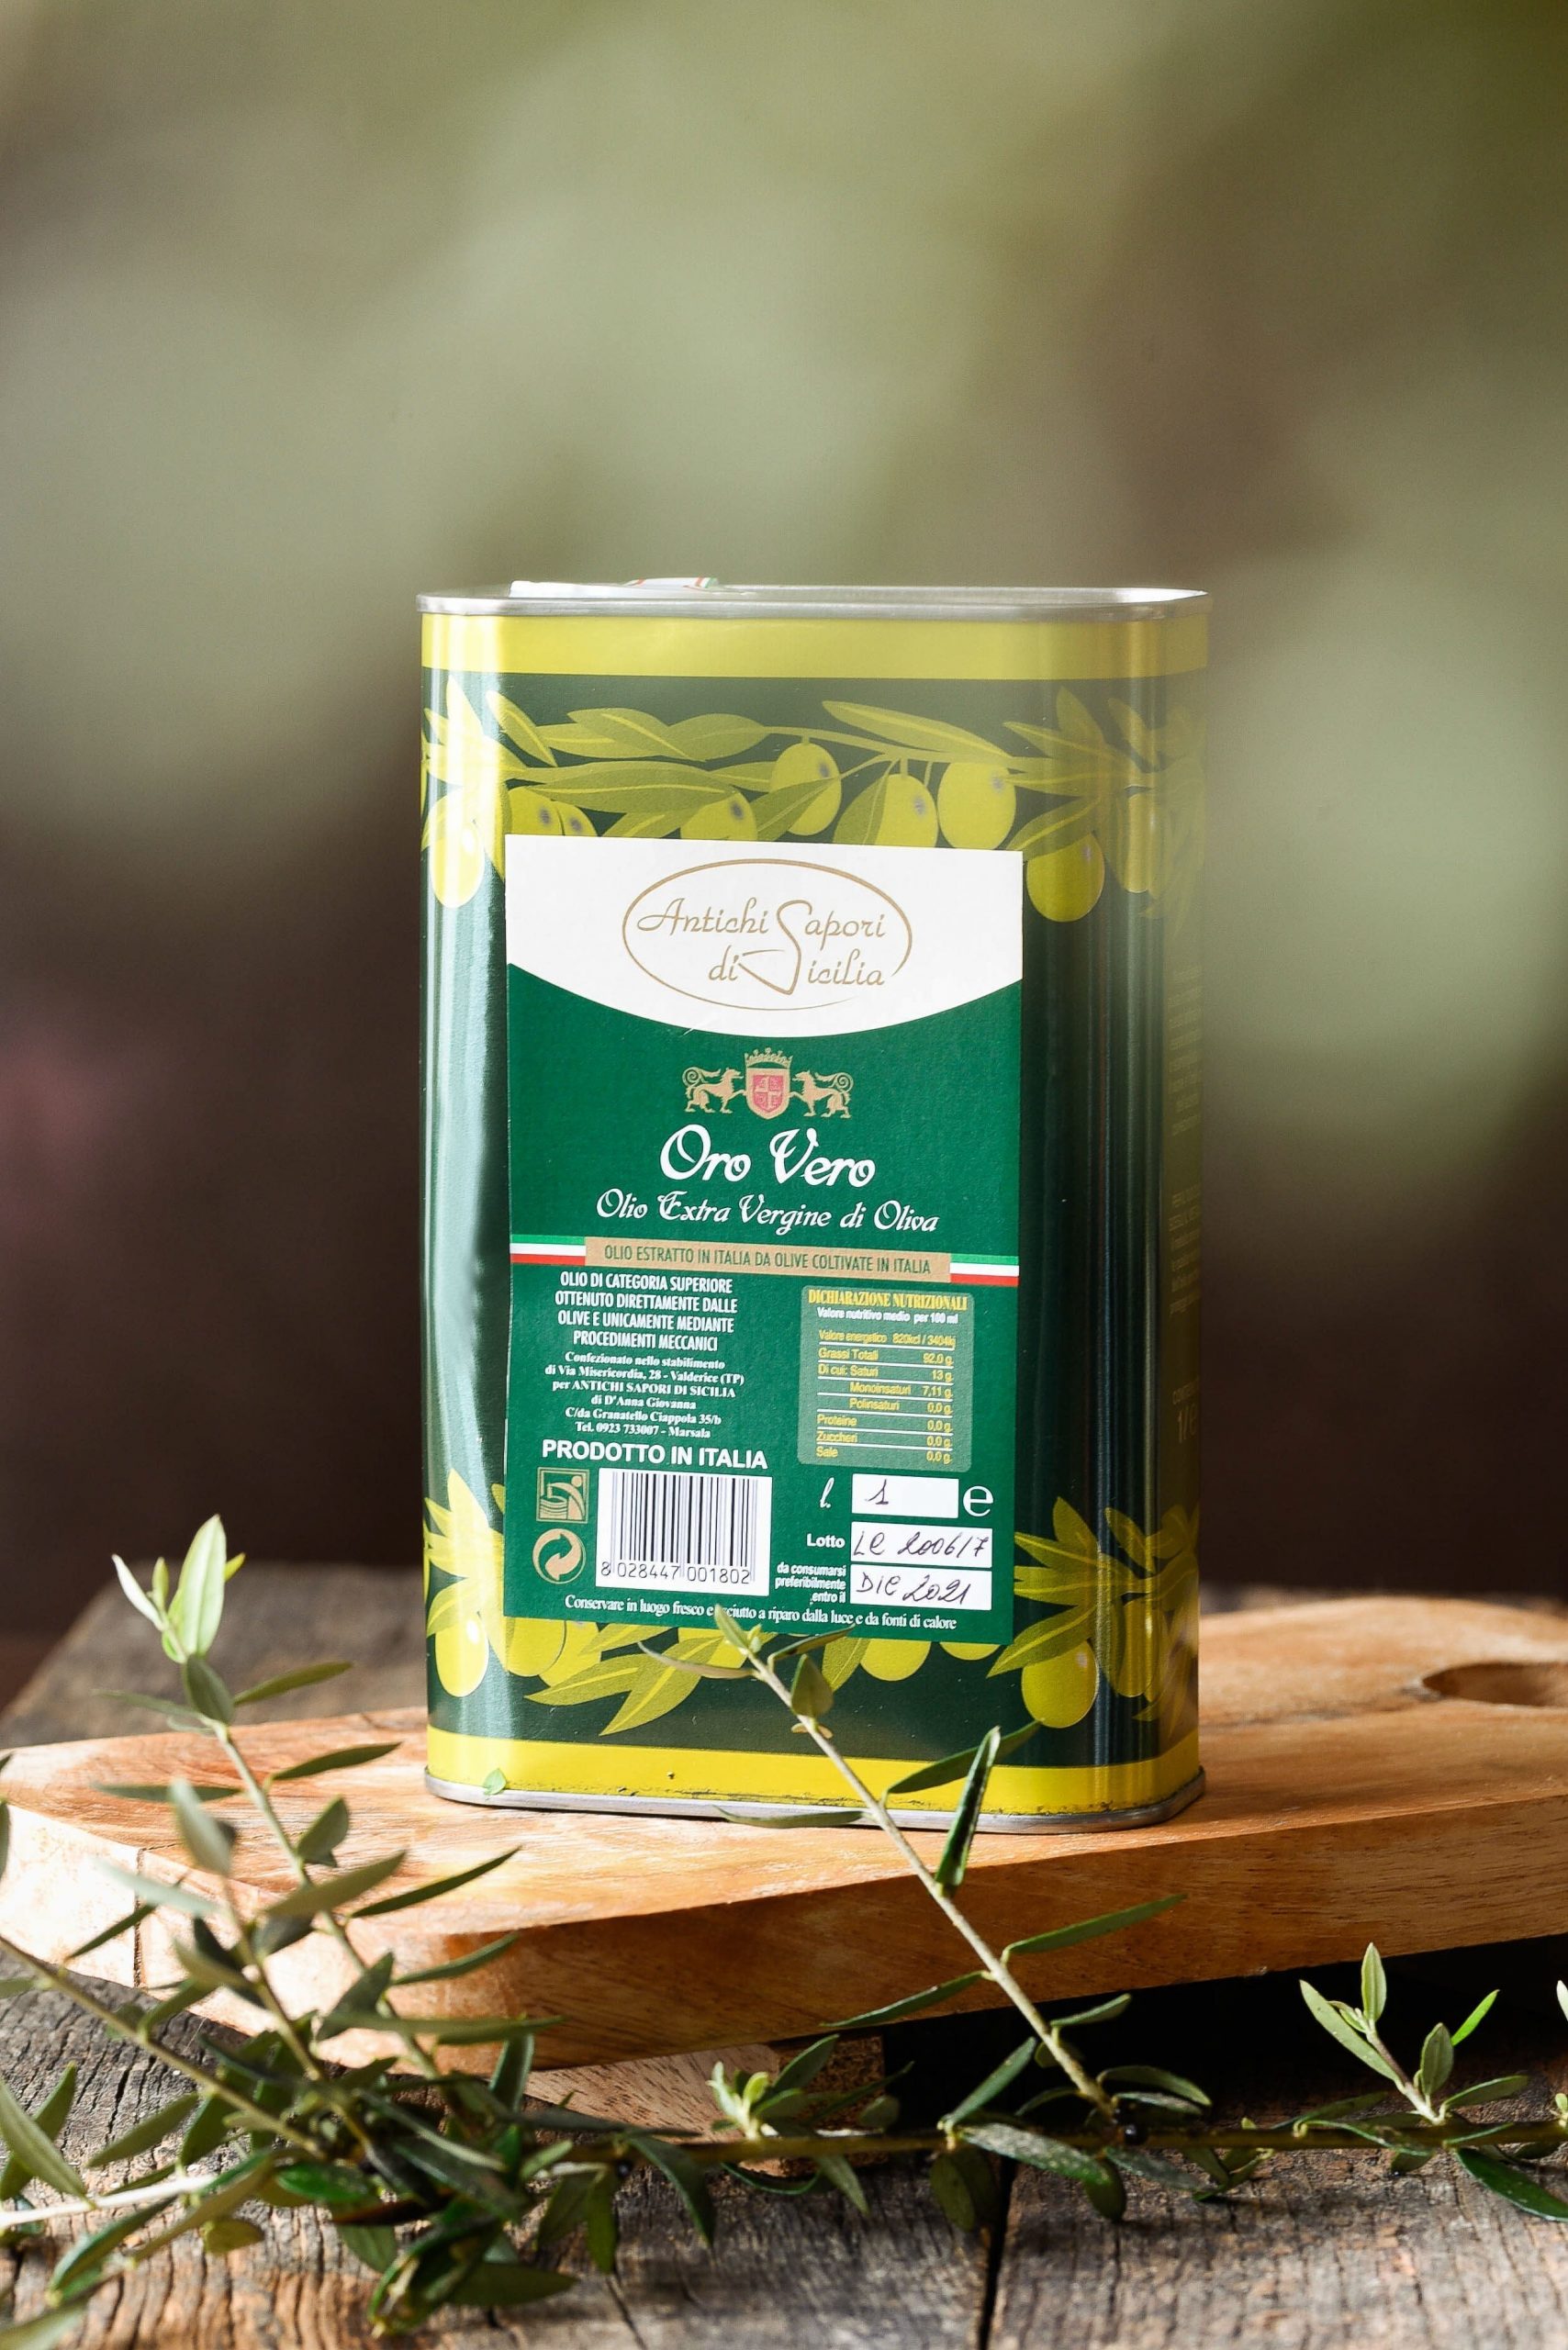 Coffret huile d'olive extra vierge – Épicerie Di voglia